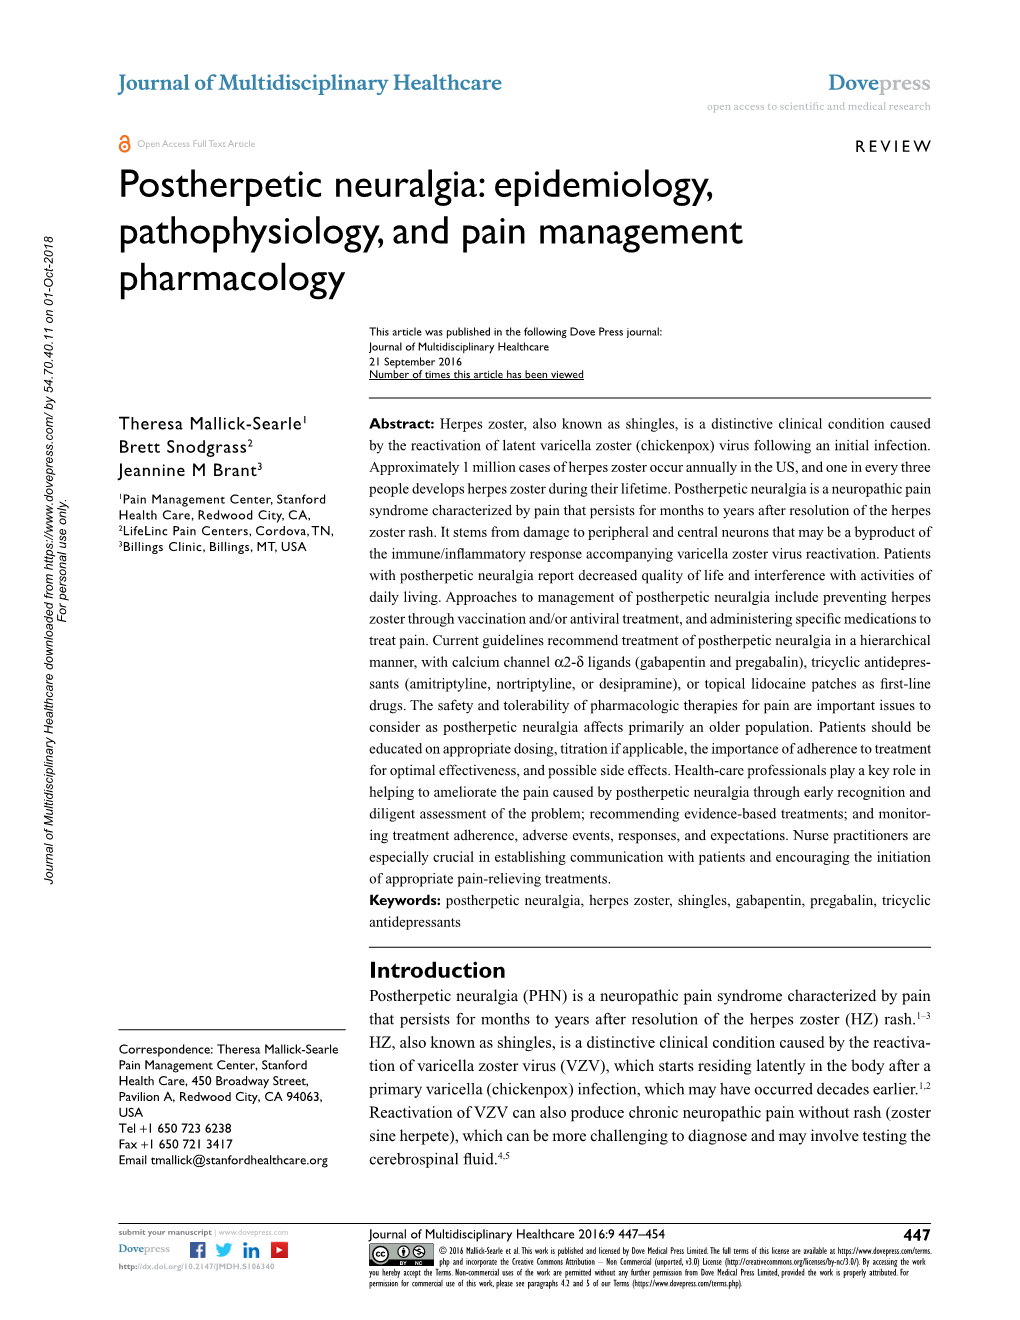 Postherpetic Neuralgia: Epidemiology, Pathophysiology, and Pain Management Pharmacology